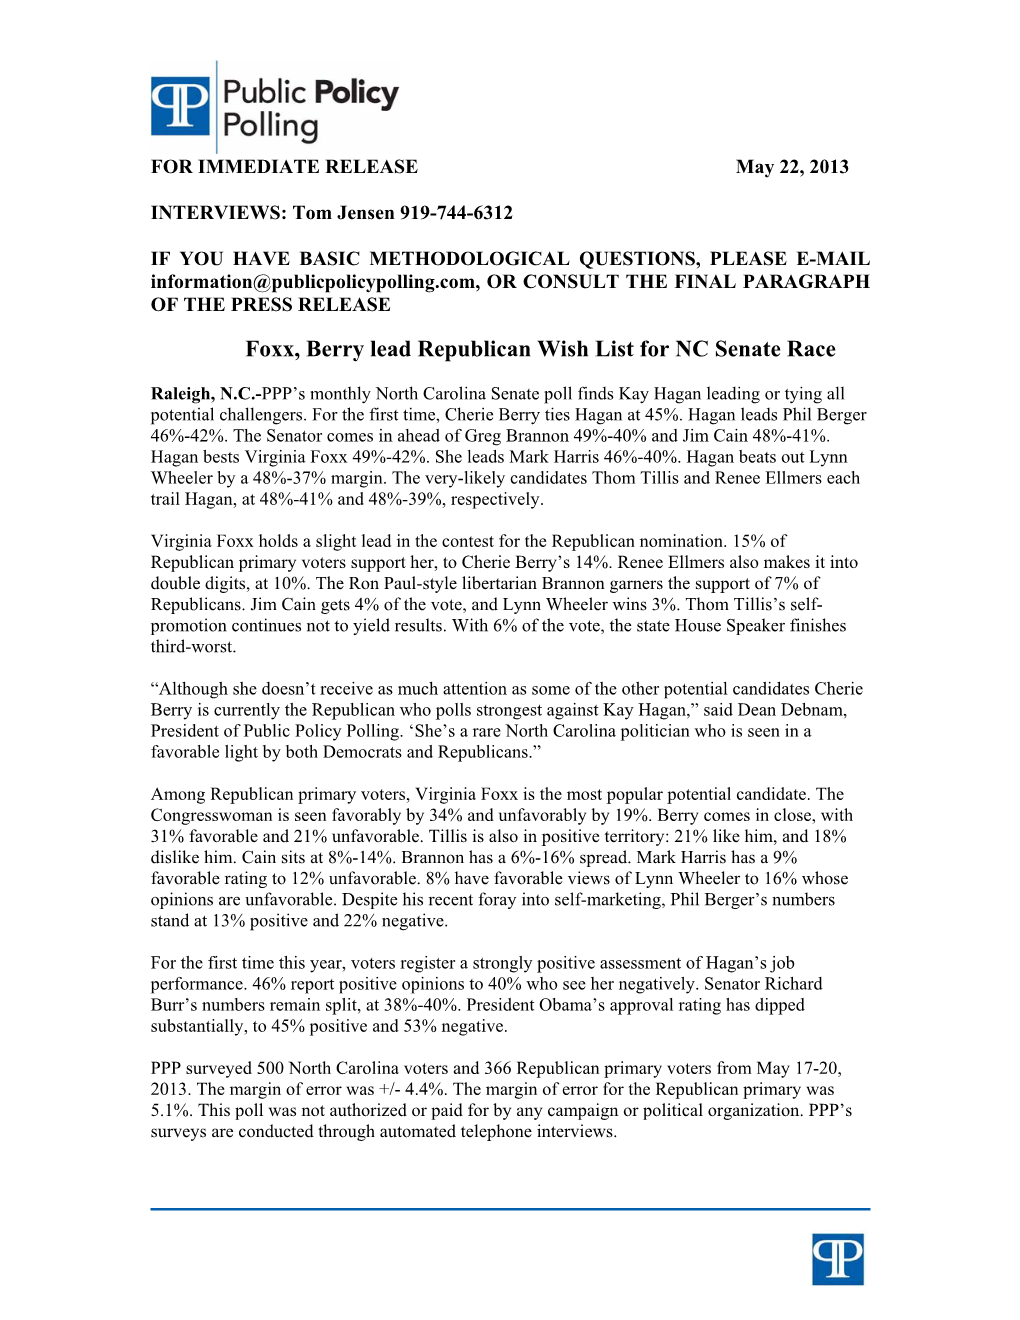 Foxx, Berry Lead Republican Wish List for NC Senate Race